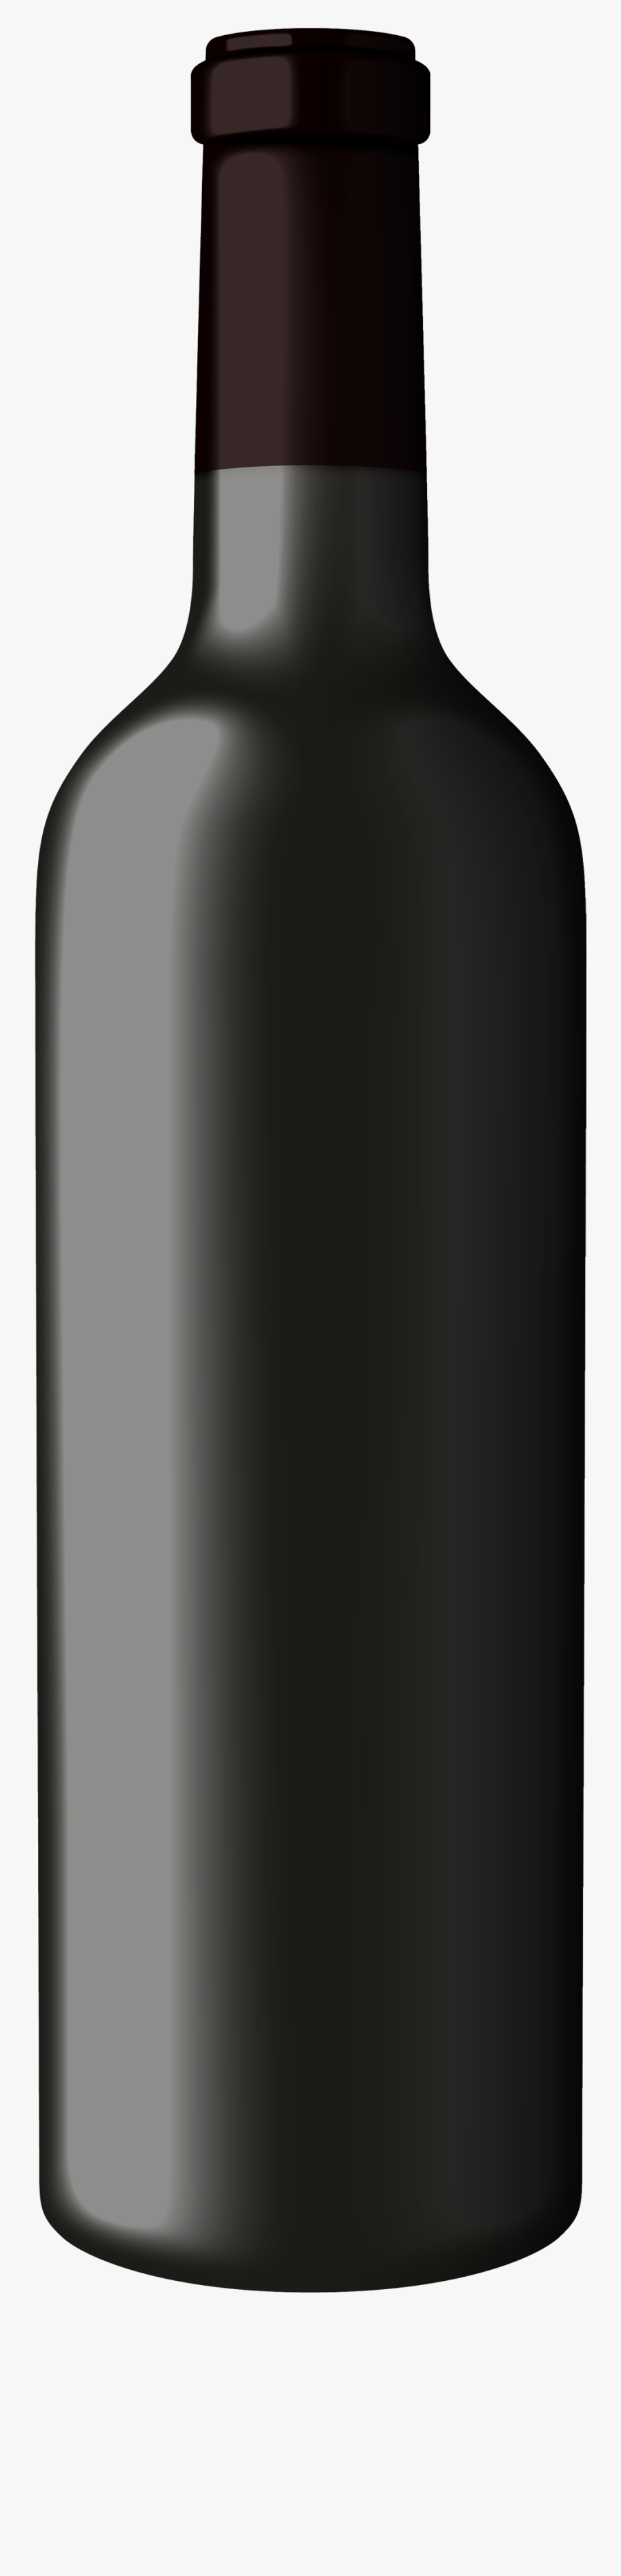 Black Wine Bottle Png Clipart - Black Wine Bottle Png, Transparent Clipart